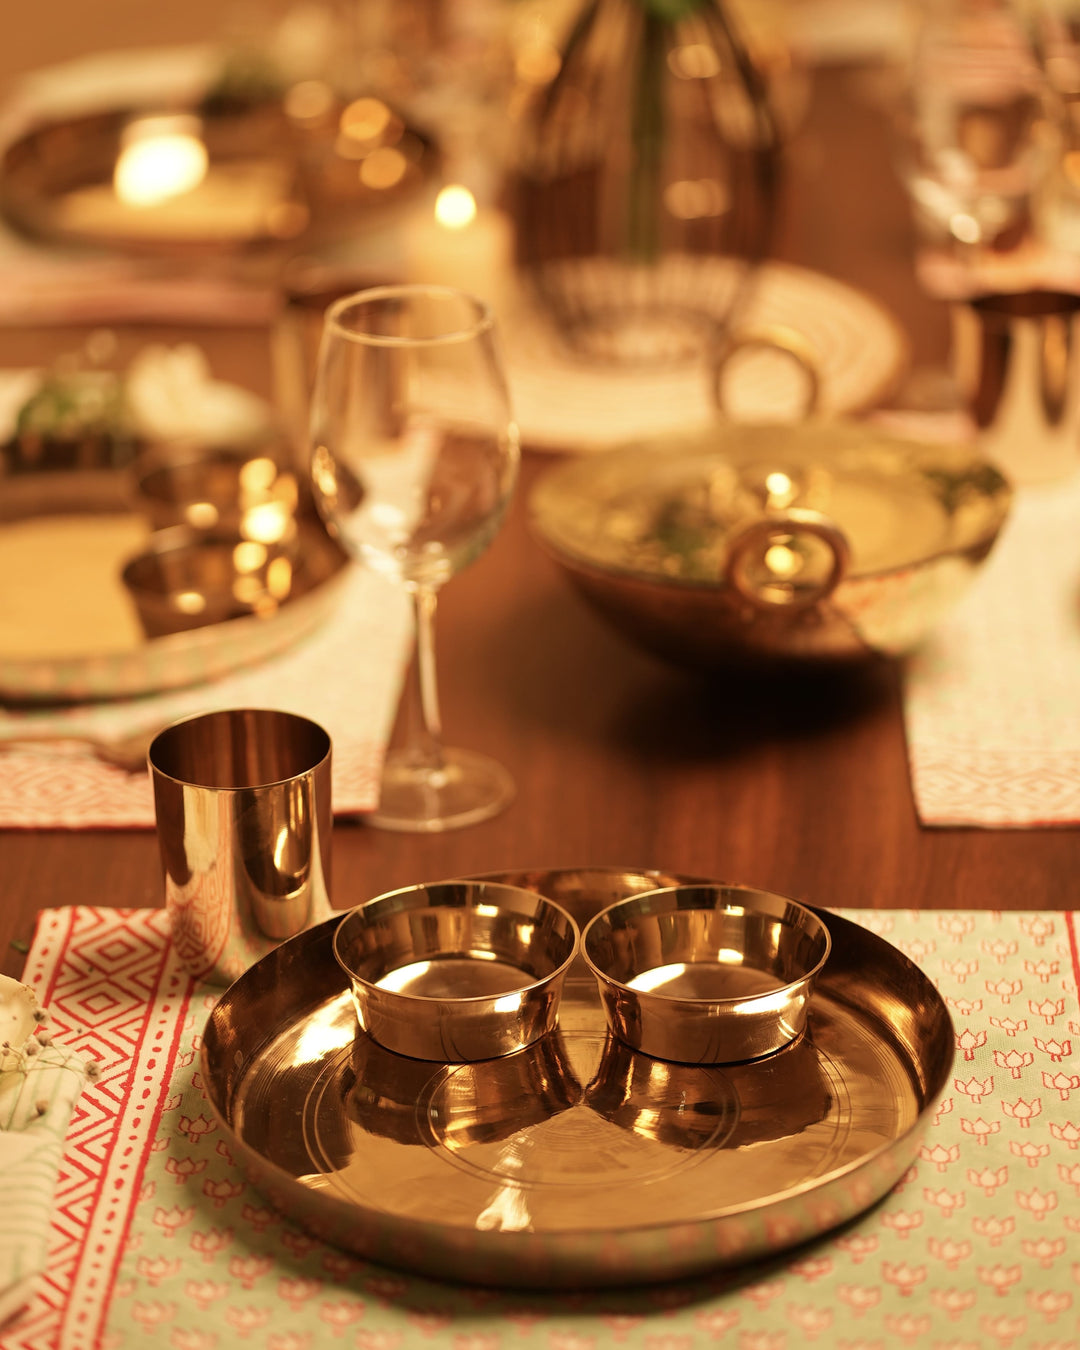 Bronze (Kansa) high hipped plate (Thaali) Set 11" - 5 pieces (1 Thaali, 2 bowls, 1 glass, 1 spoon)